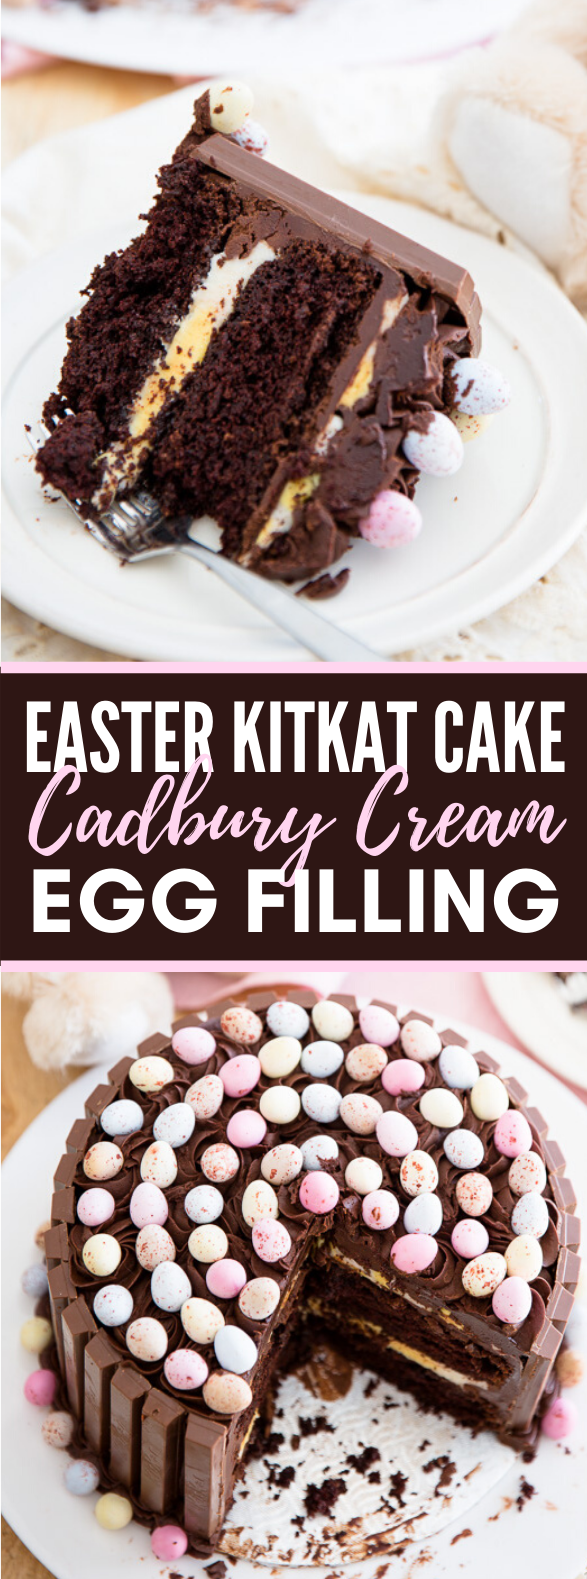 EASTER KITKAT CAKE WITH CADBURY CREAM EGG FILLING #chocolate #dessert